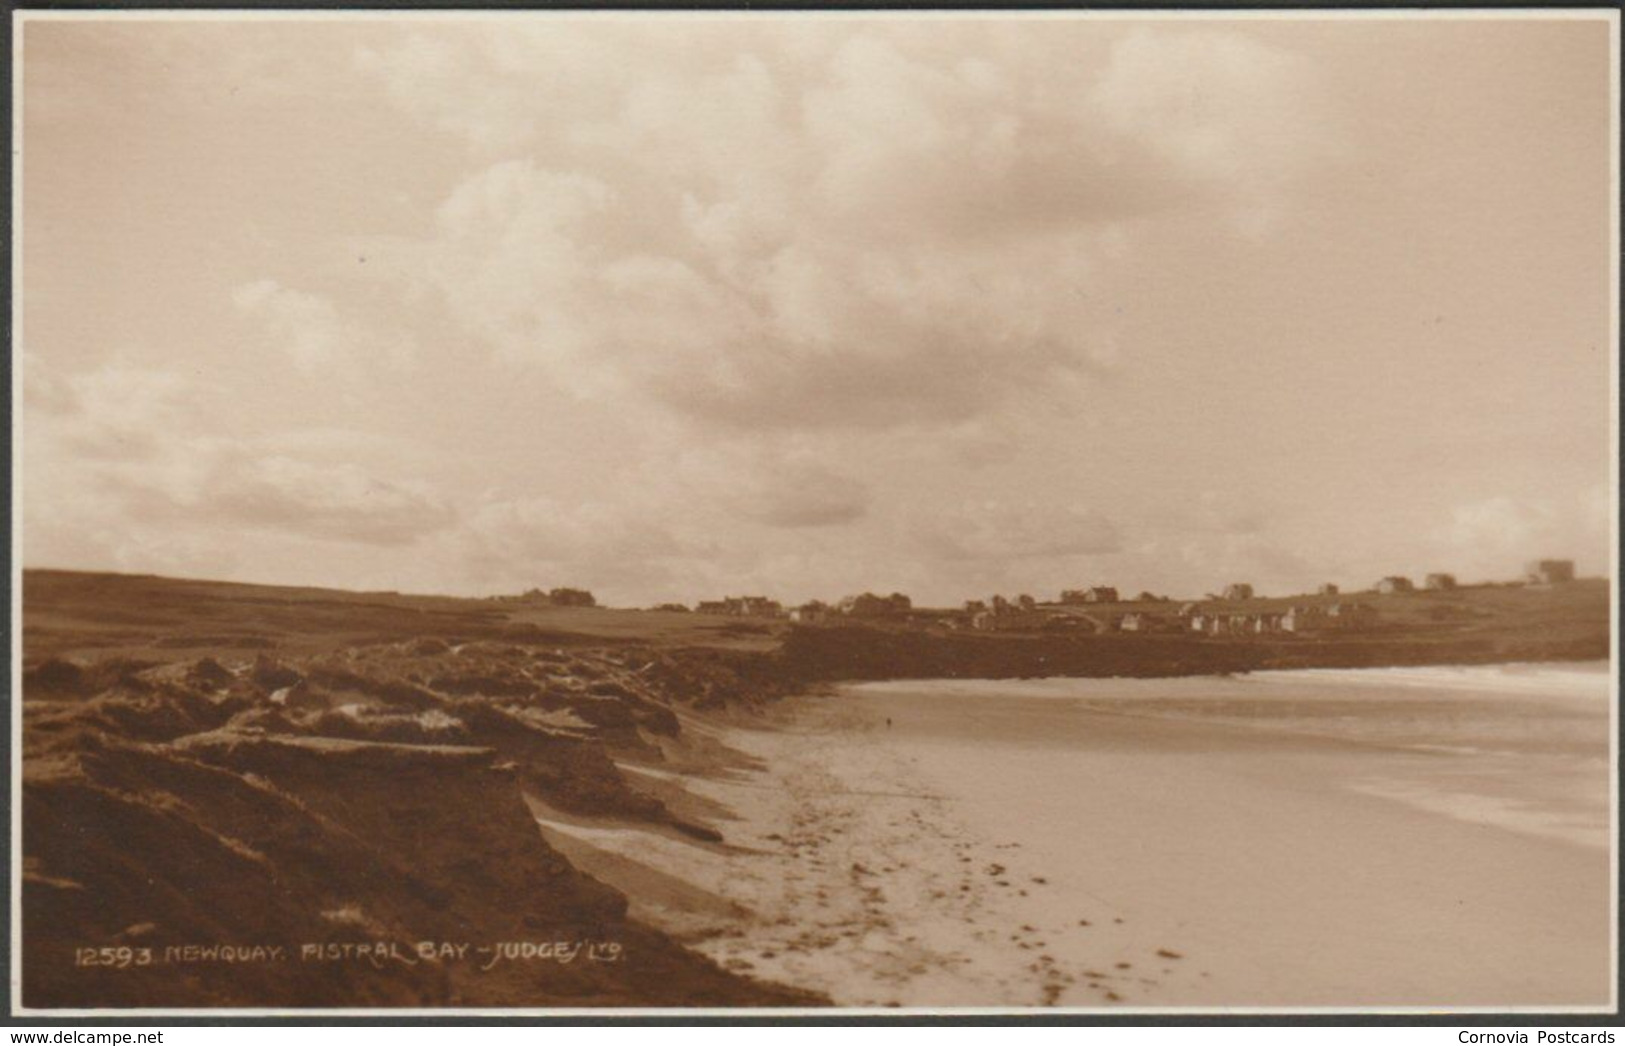 Fistral Bay, Newquay, Cornwall, 1931 - Judges RP Postcard - Newquay